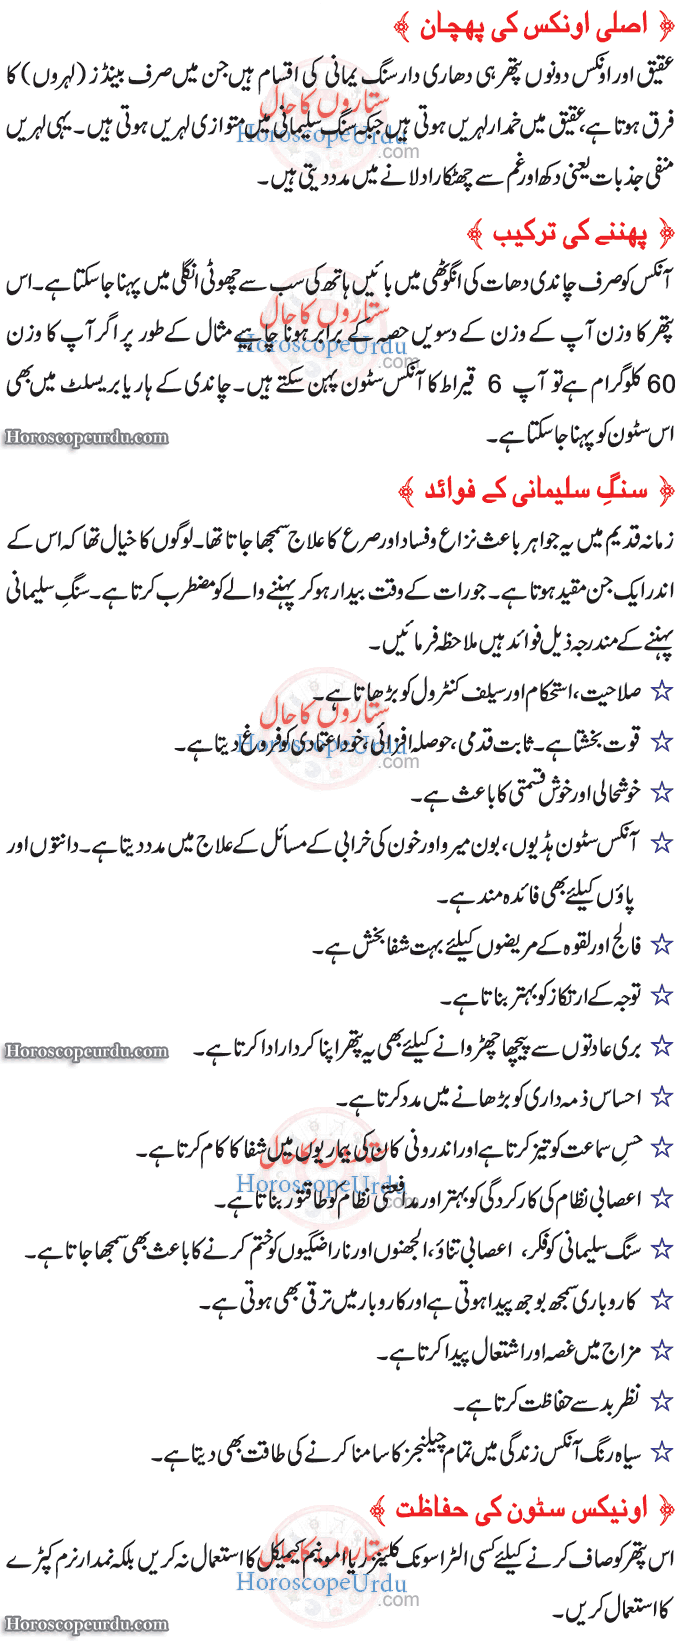 Onyx Stone Information in Urdu